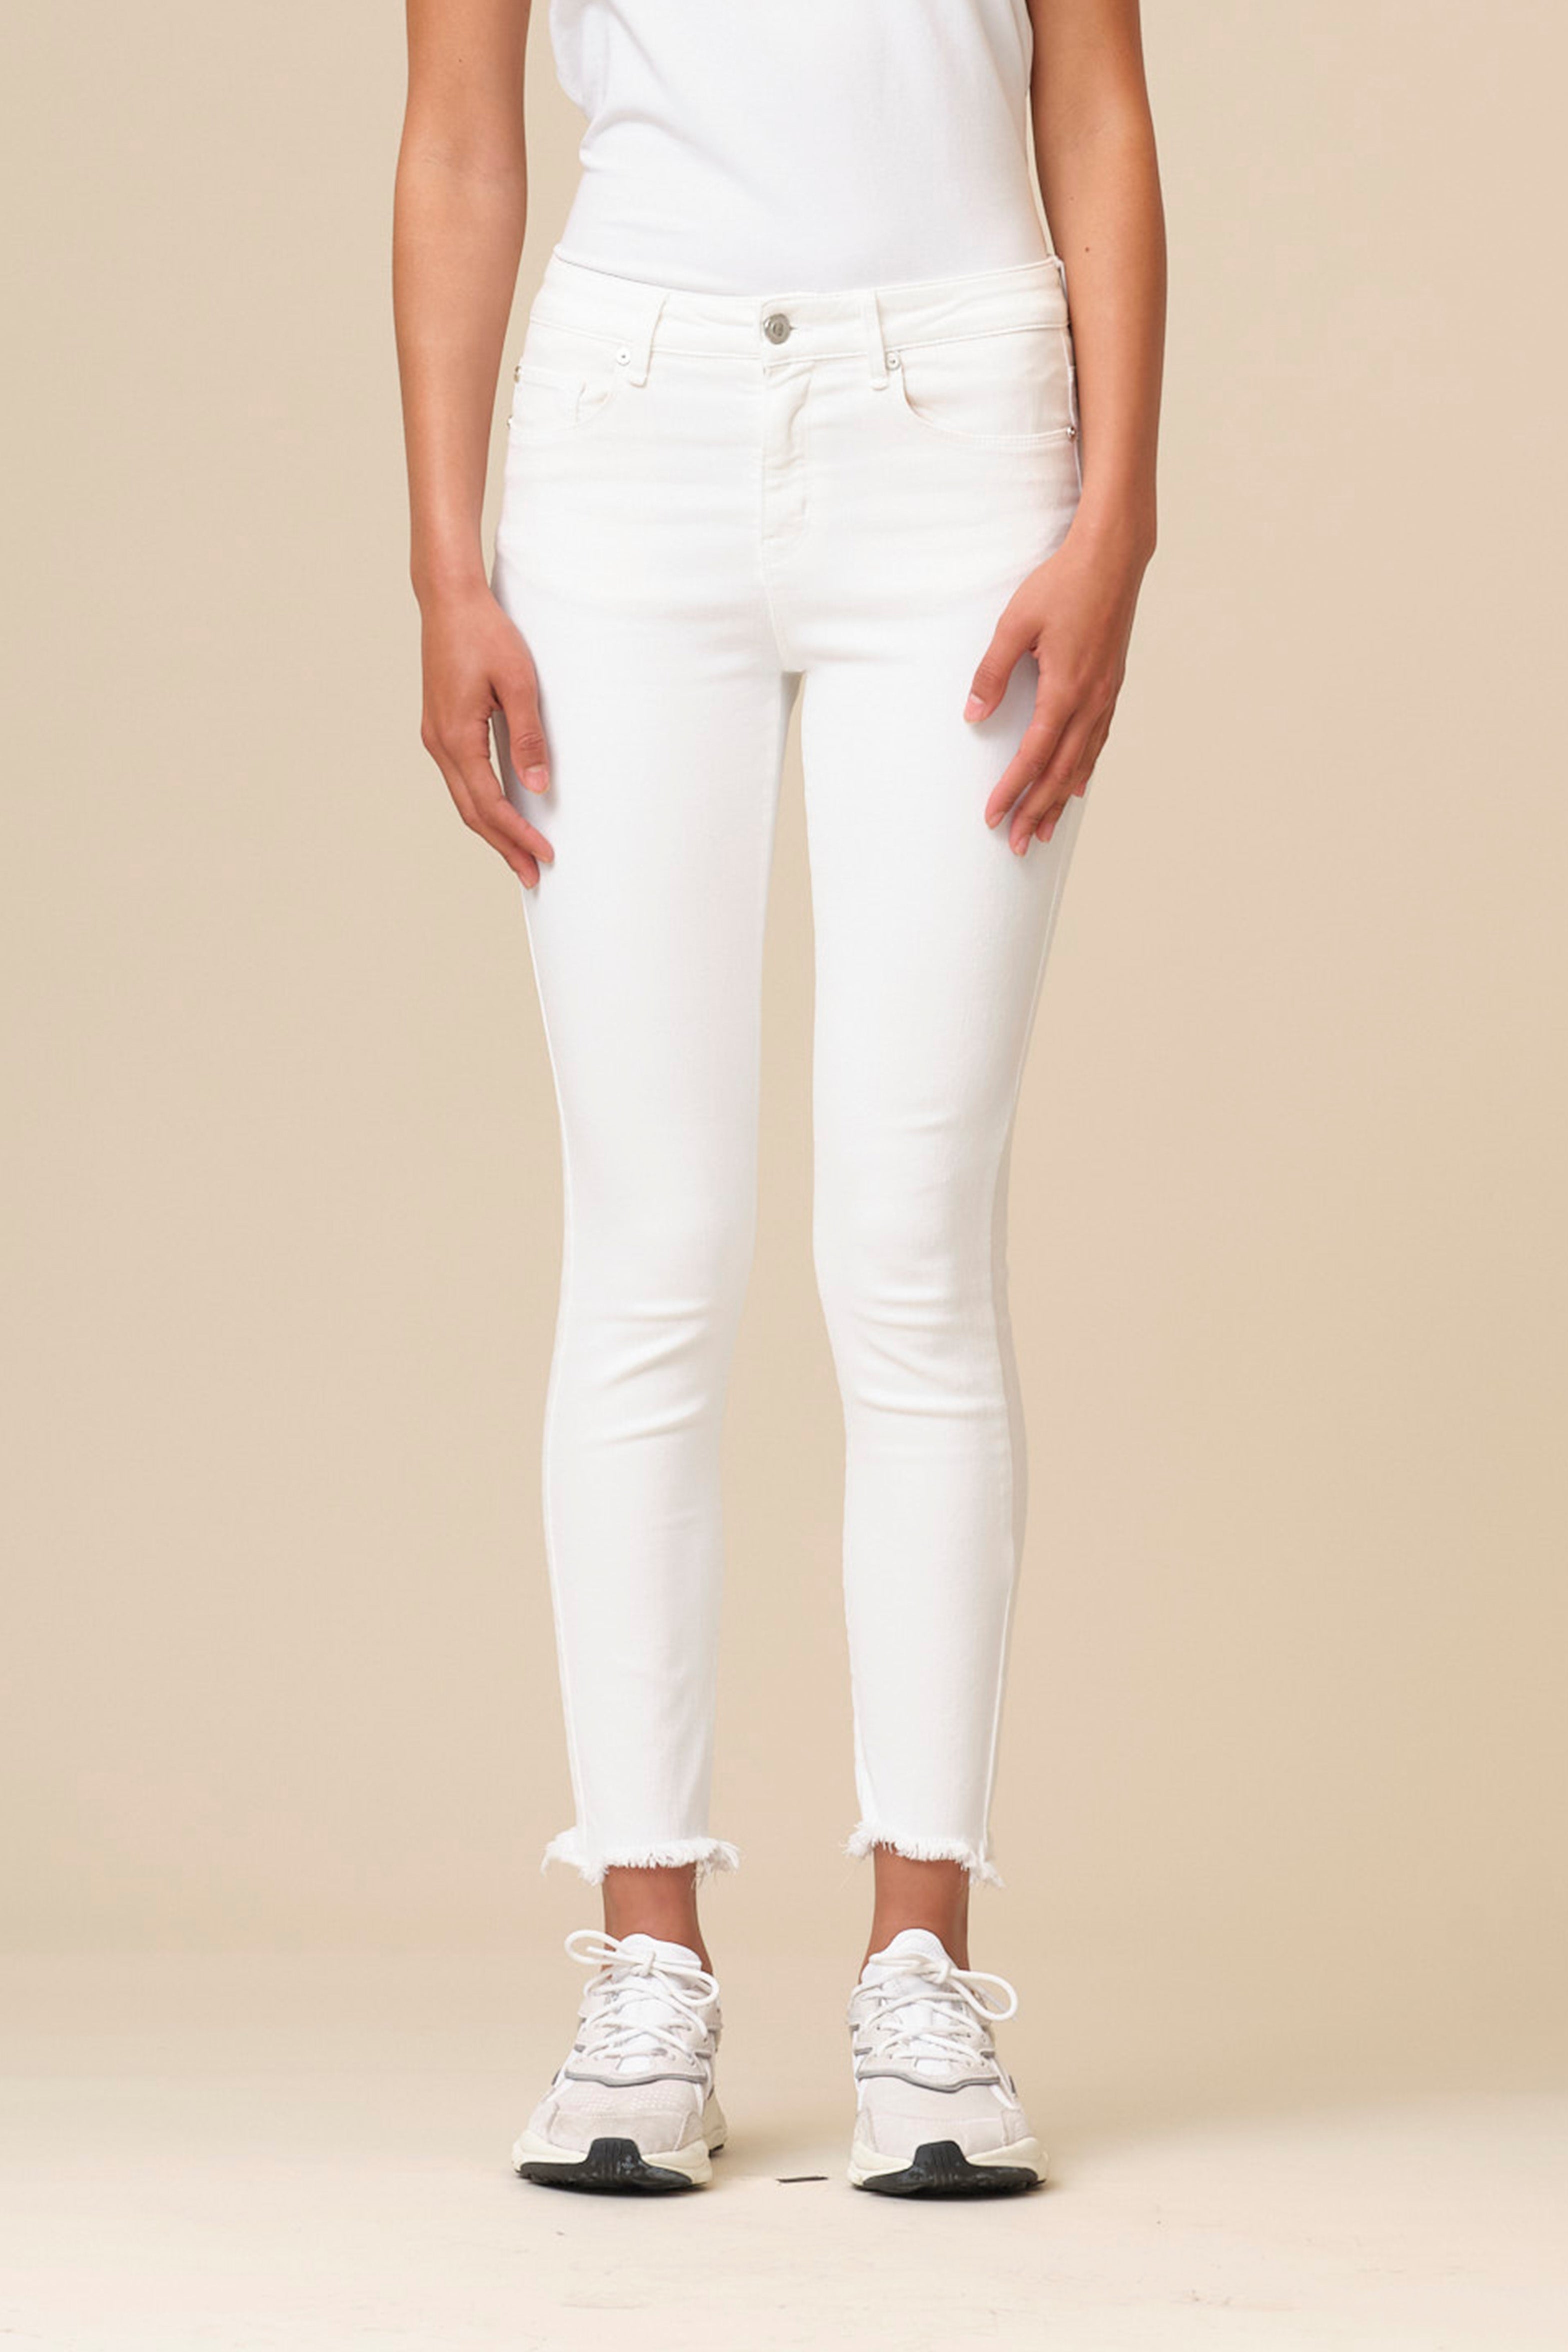 IVY Copenhagen IVY-Alexa Jeans White Jeans & Pants 01 White